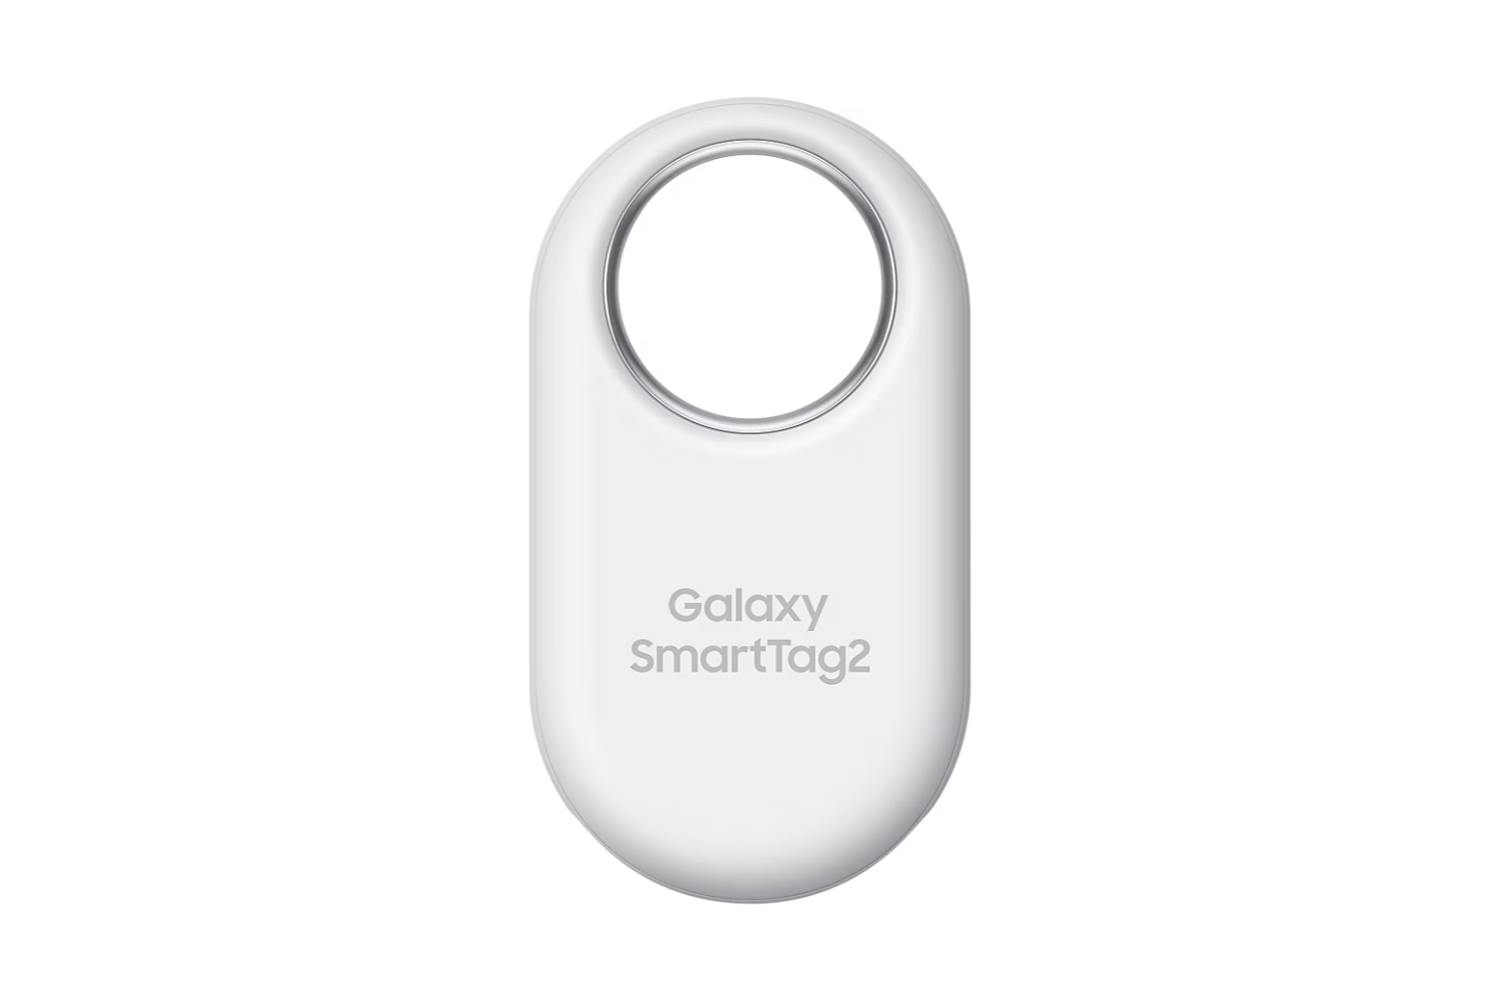 Samsung Galaxy SmartTag2 - Anti-loss Bluetooth tag for cellular